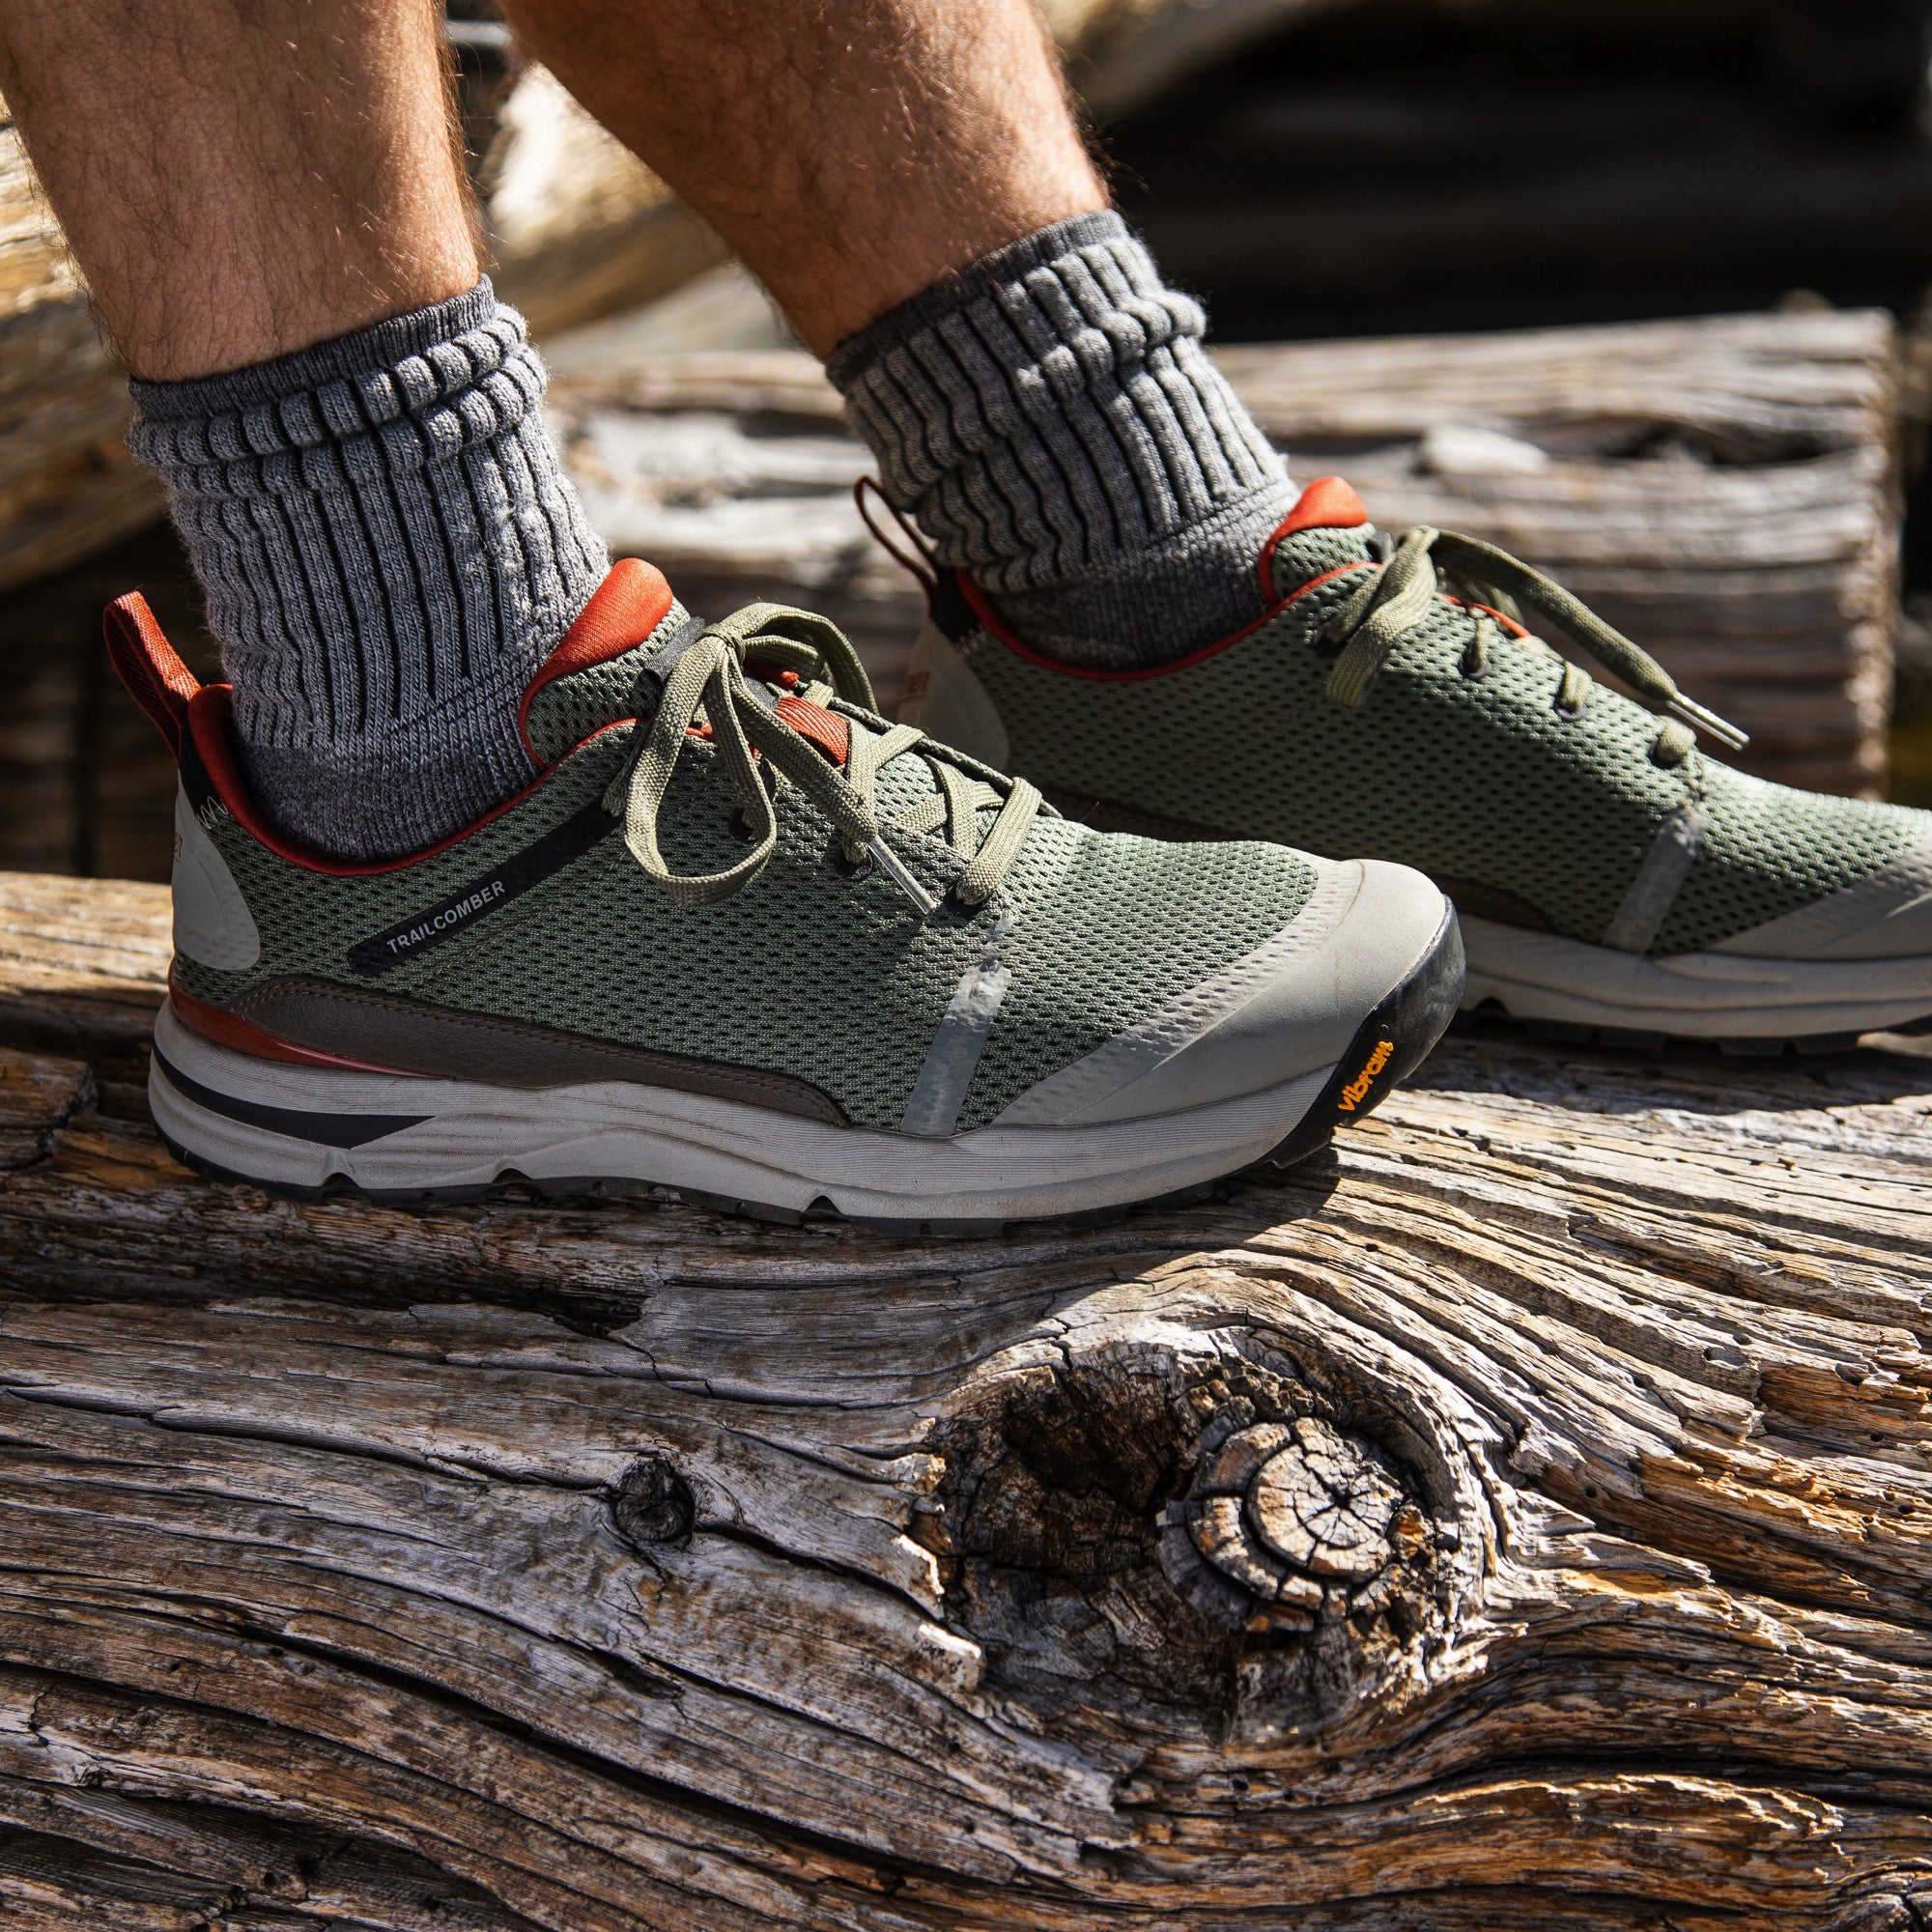 Danner Men's Trailcomber 3" Hiking Shoe - Lichen/Picante - 63351  - Overlook Boots